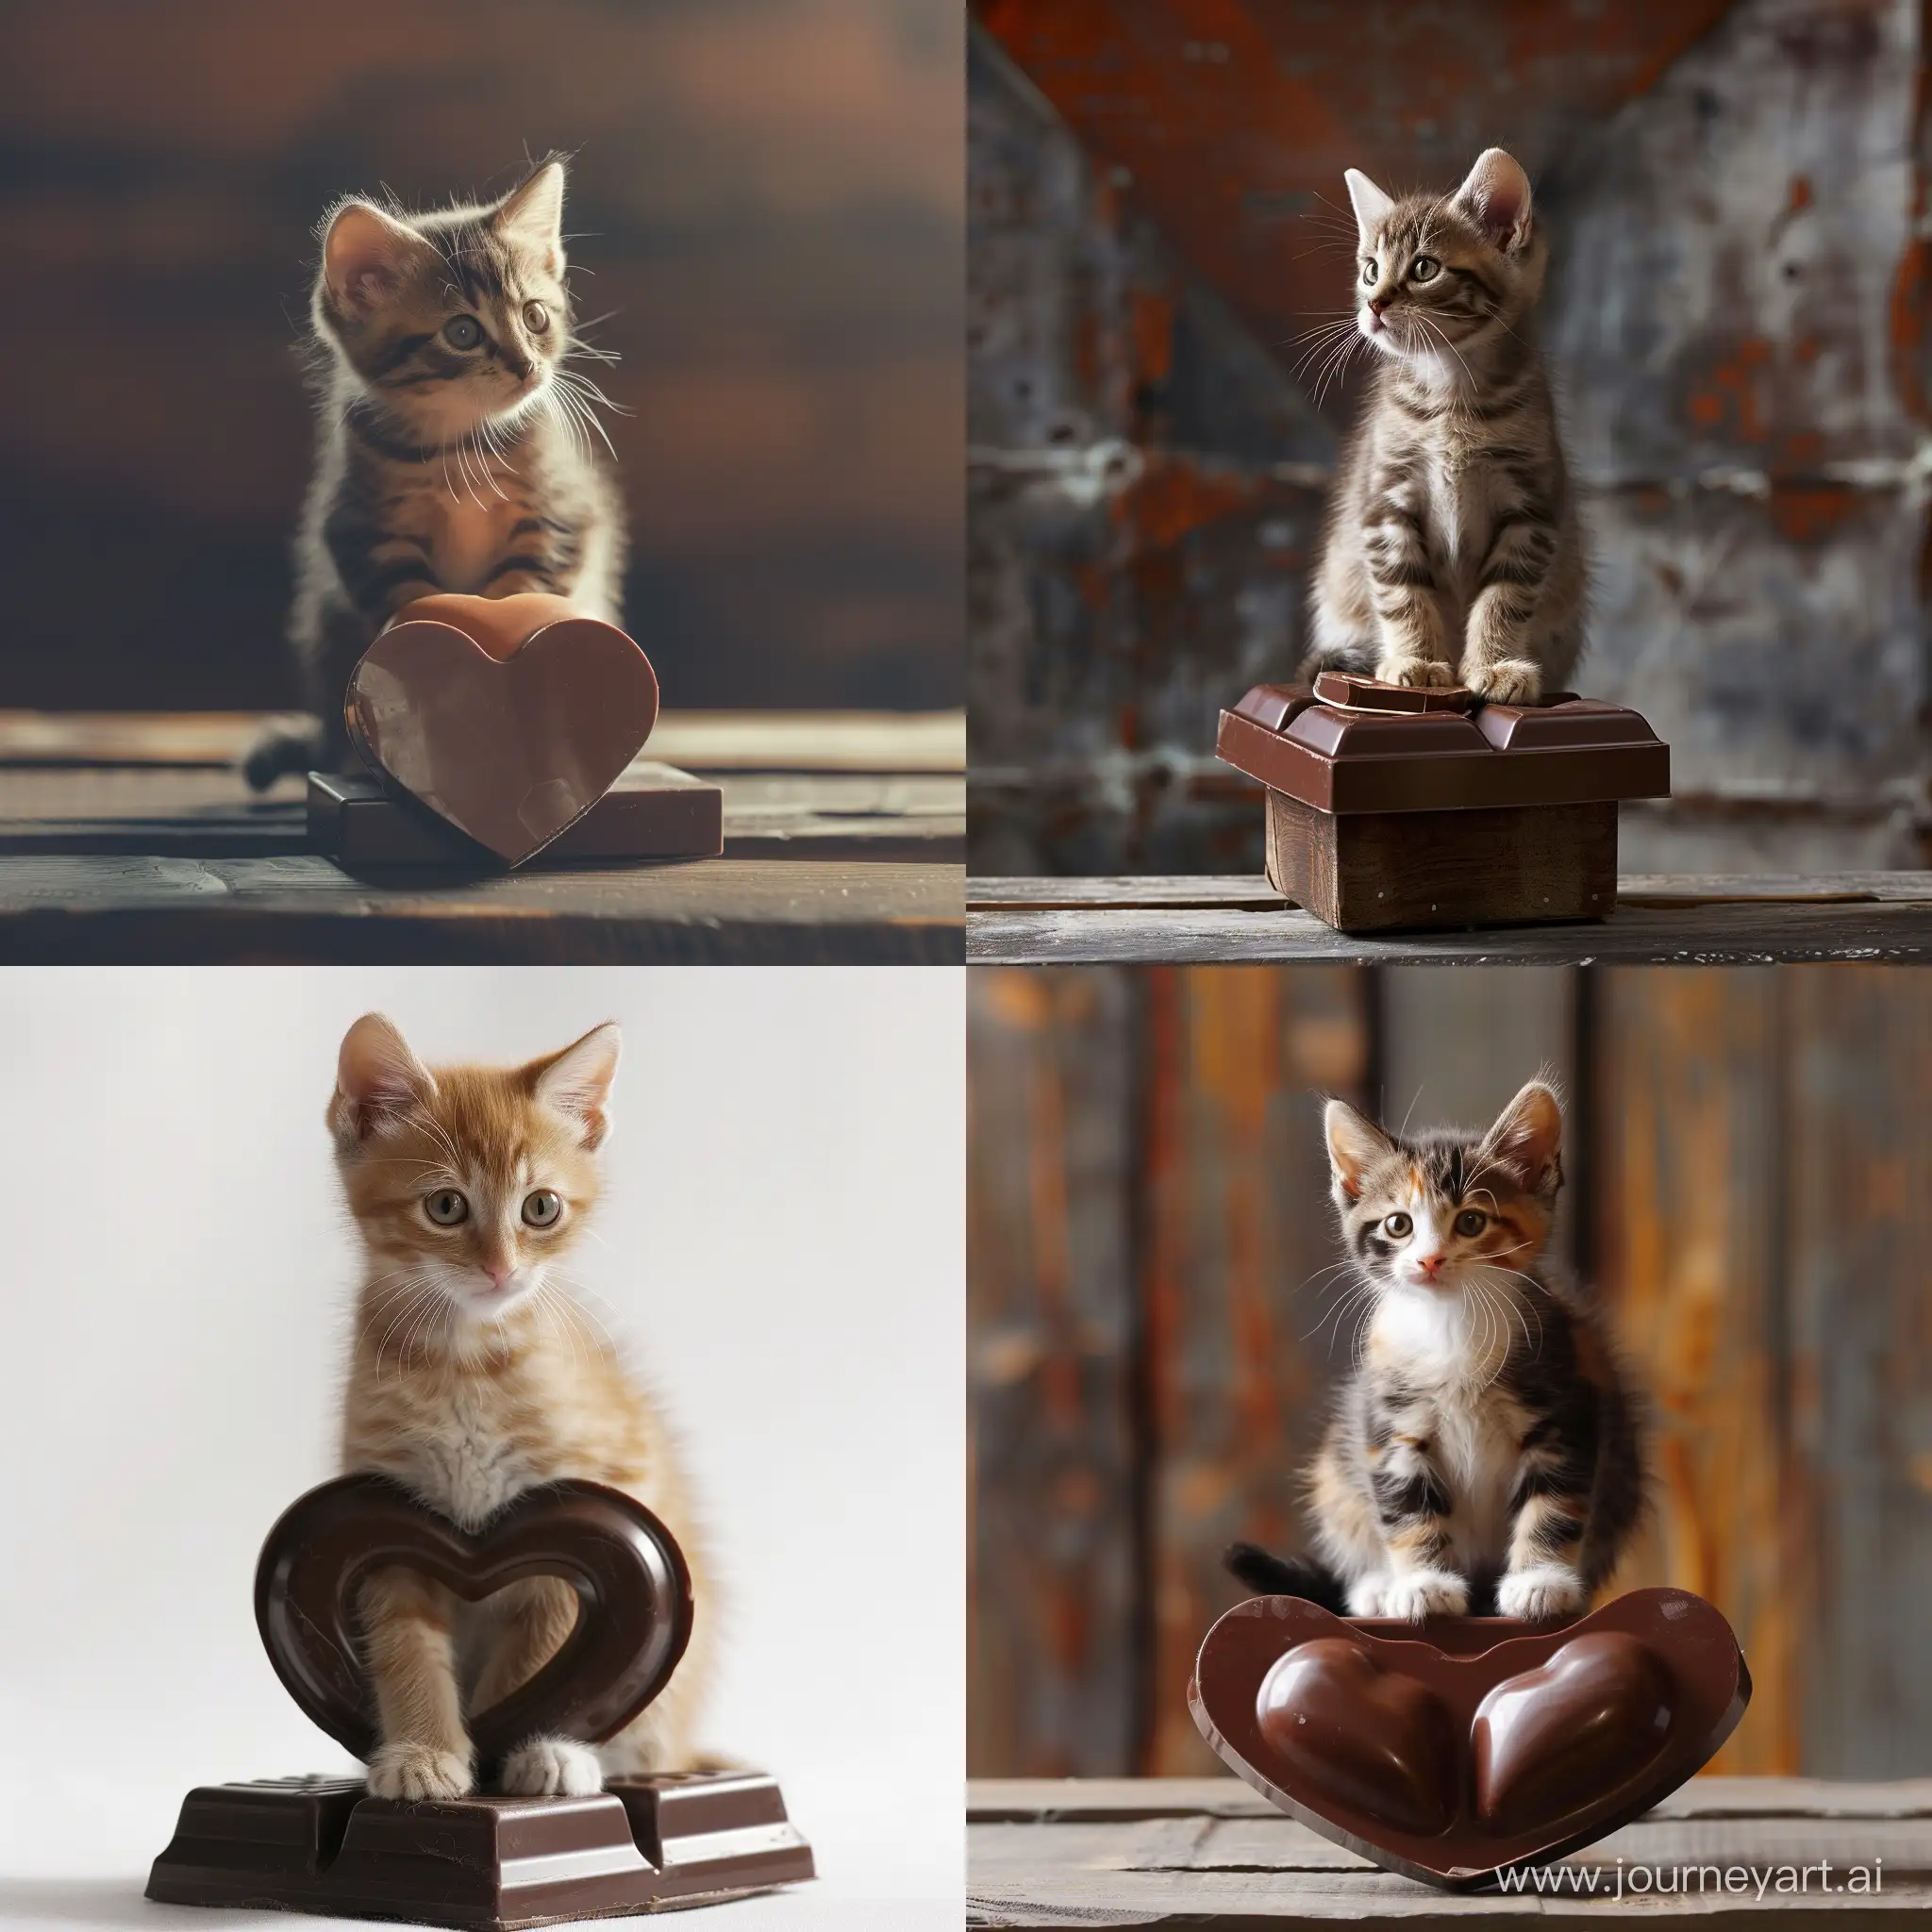 a cute kitten sits on a heart-shaped chocolate box, shallow depth-offield, high-key lighting